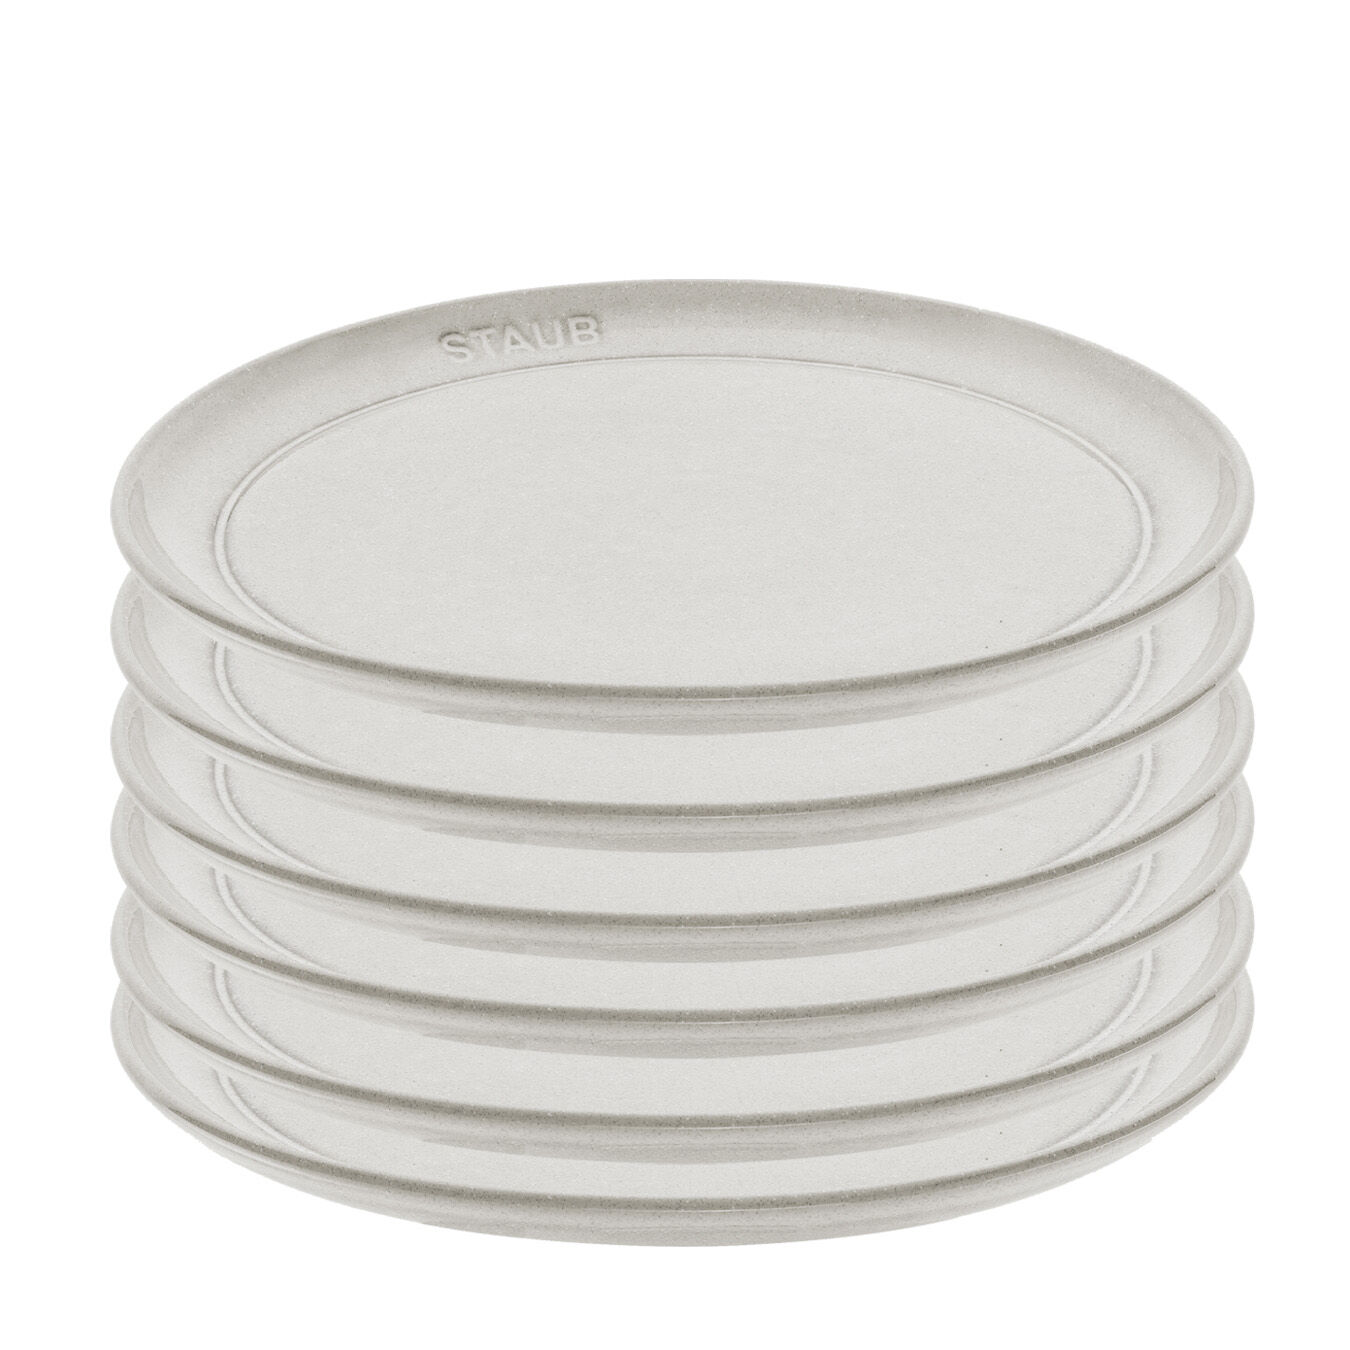 Conjunto de pratos planos 22cm,6 peças, cerâmica, branco trufado,,large 1